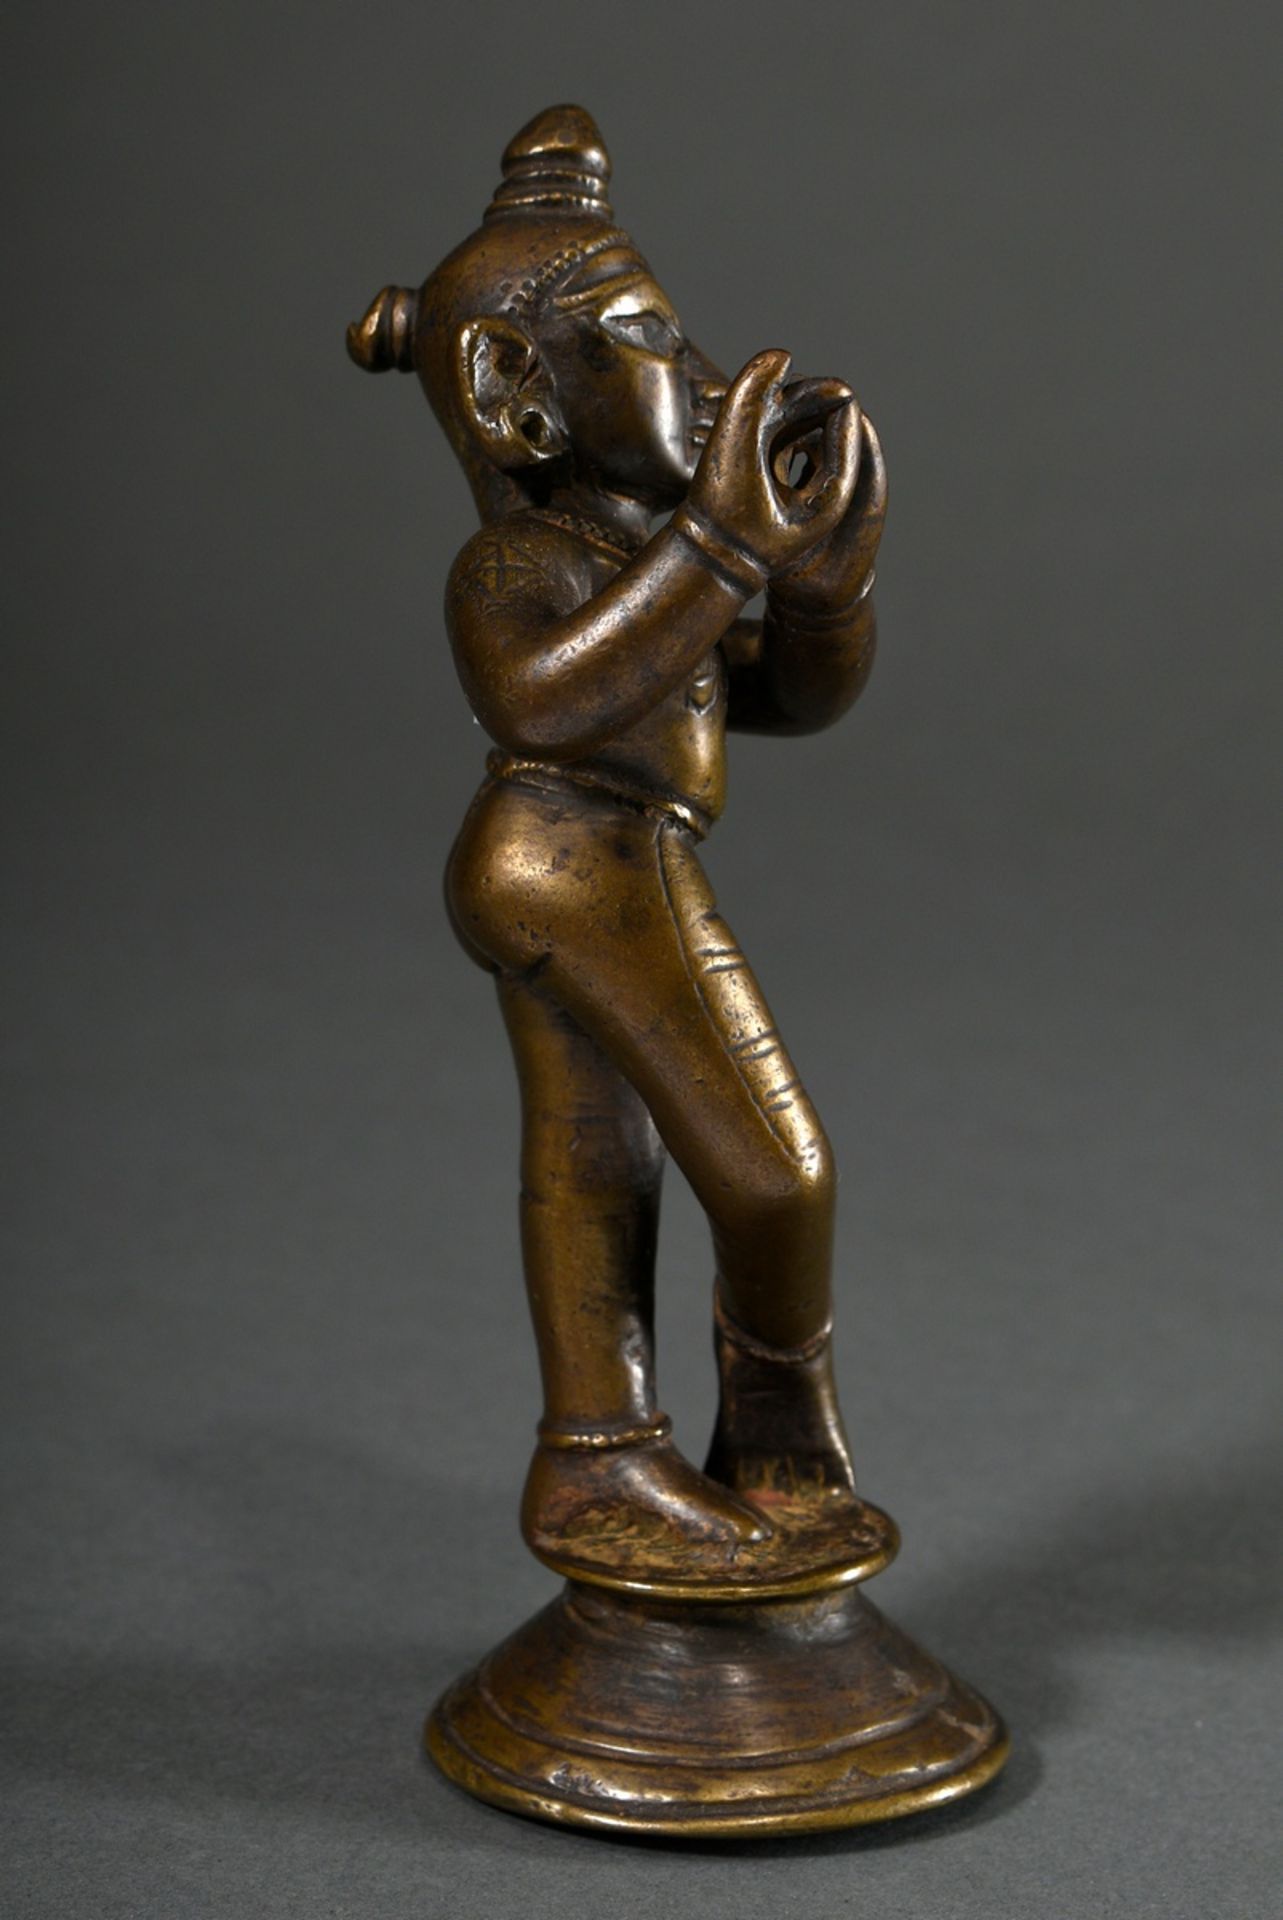 Bronze Figur "Krishna Venugopola", Indien 18. Jh., H. 15,8cm, Flöte verloren, in situ erworben um 1 - Bild 2 aus 5